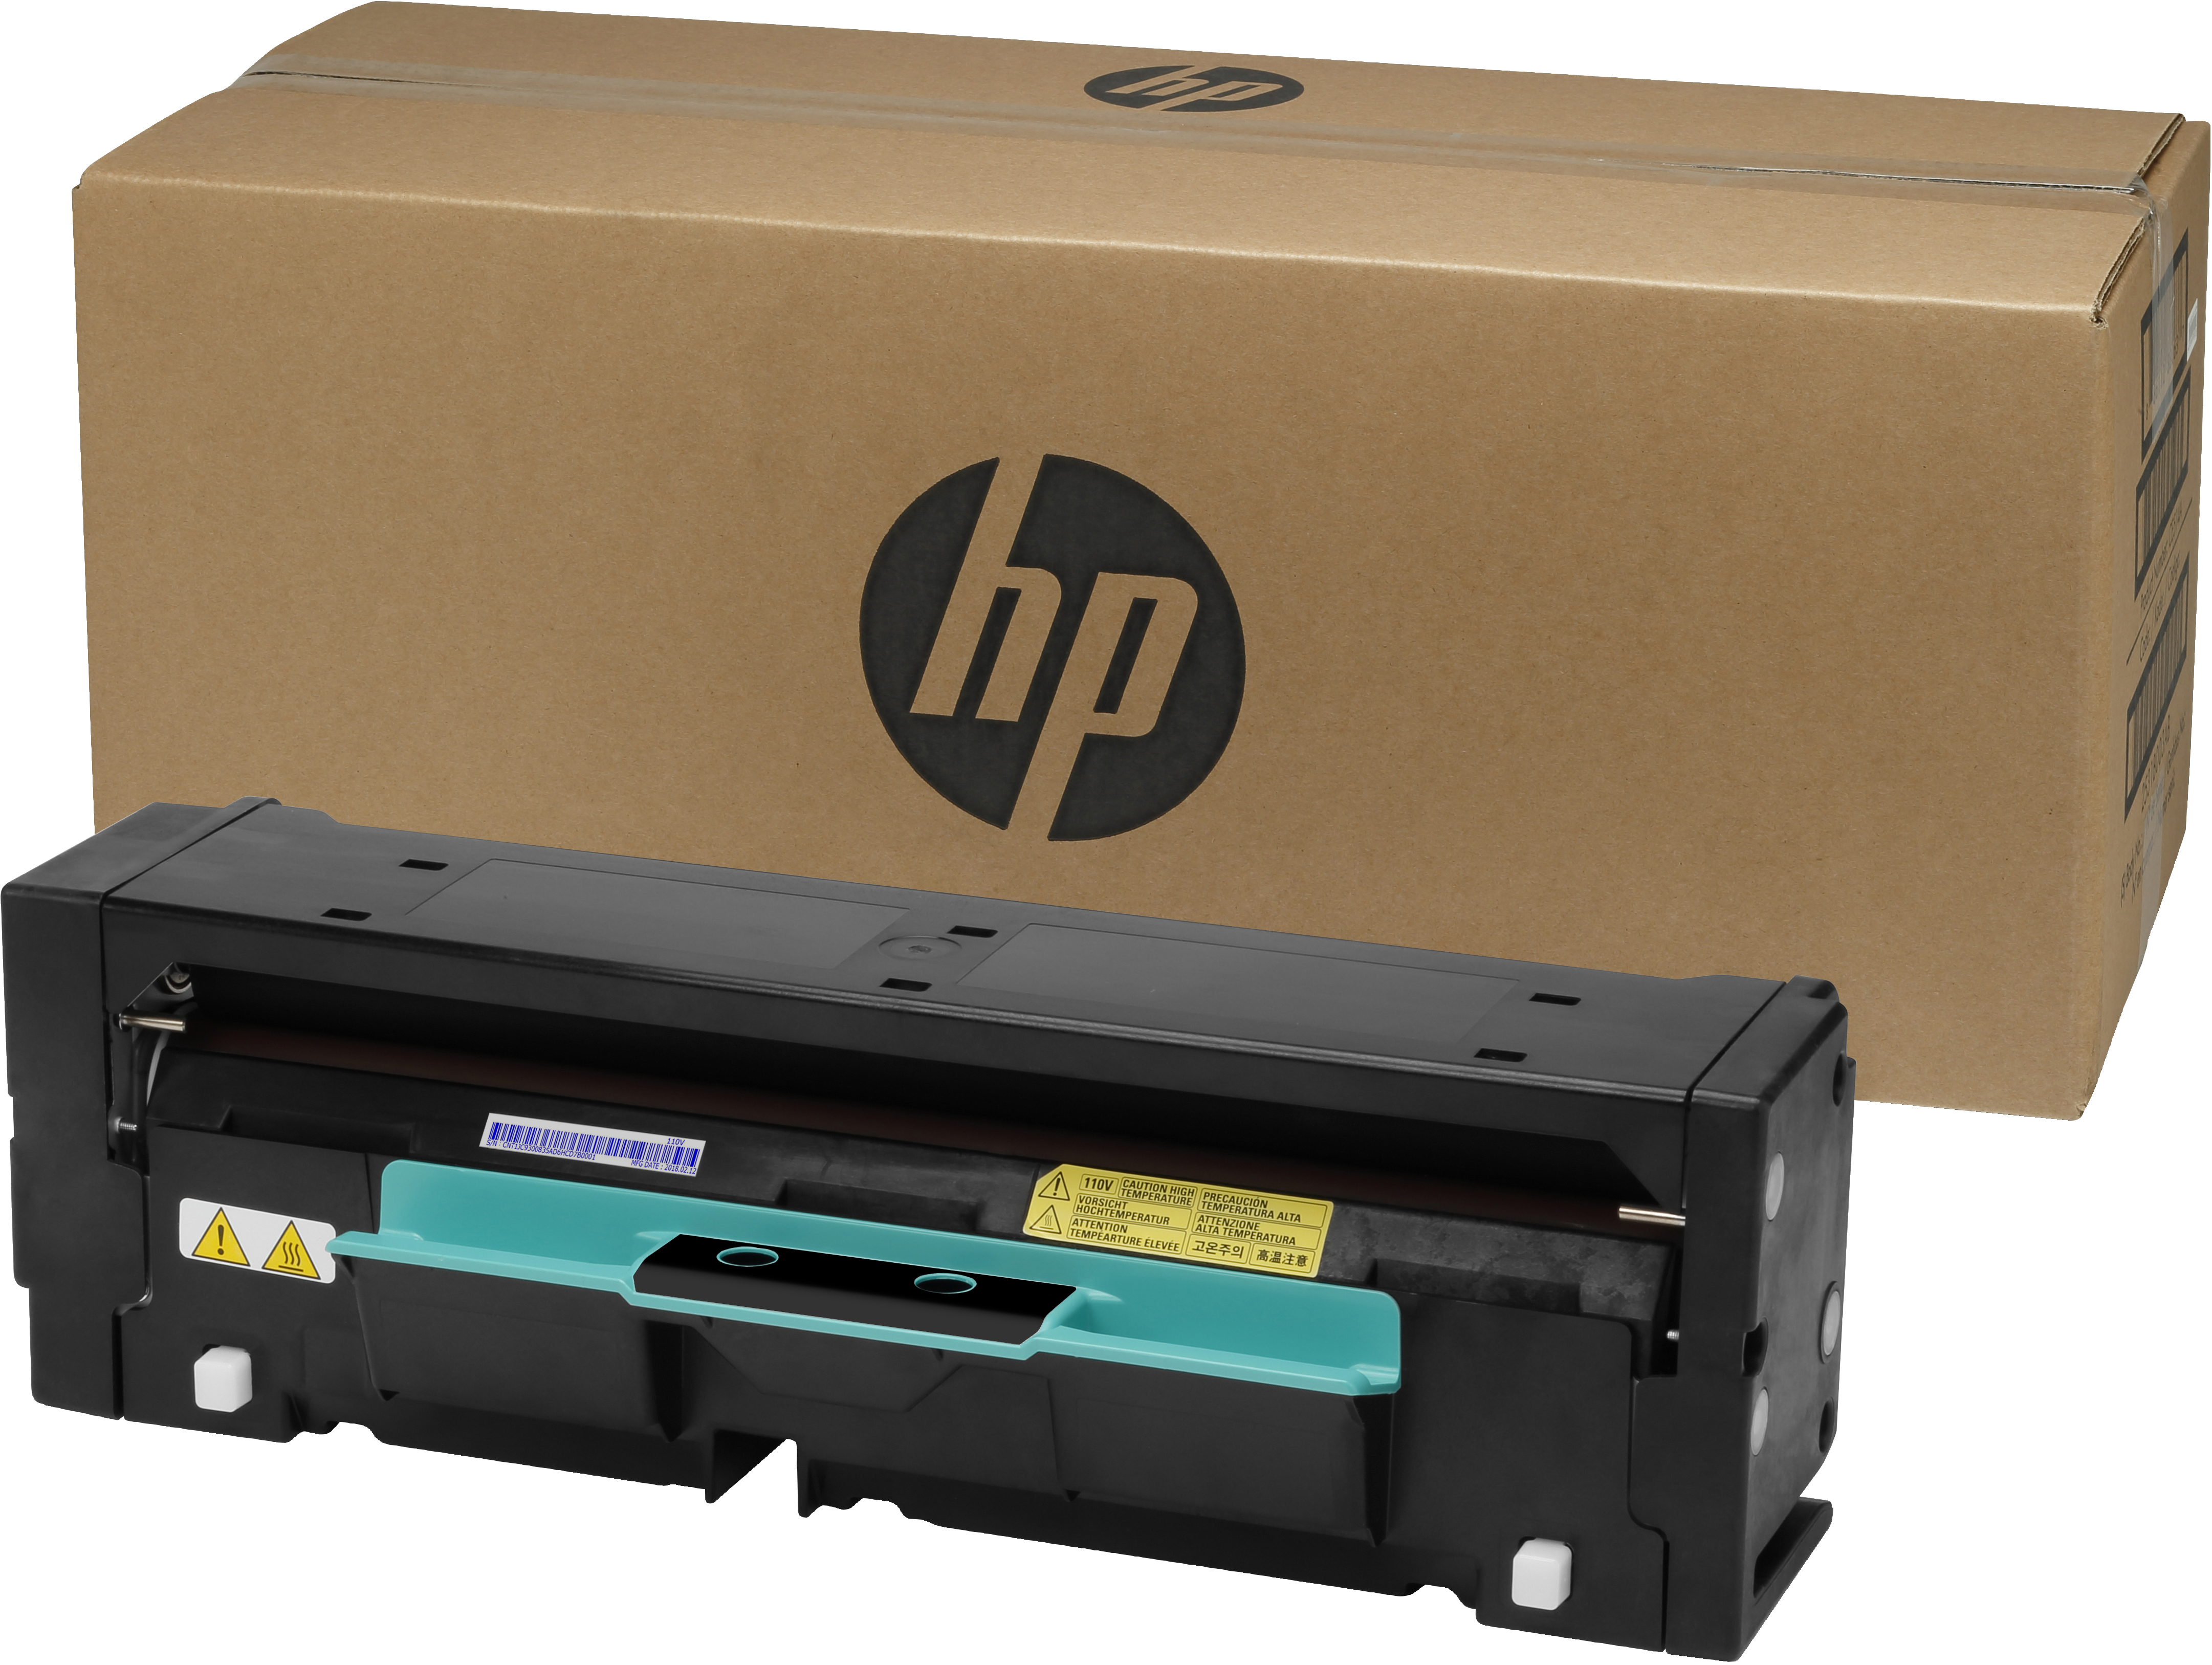 HP  (110 V) - beheizte Andruckwalze - für PageWide Color MFP 77X